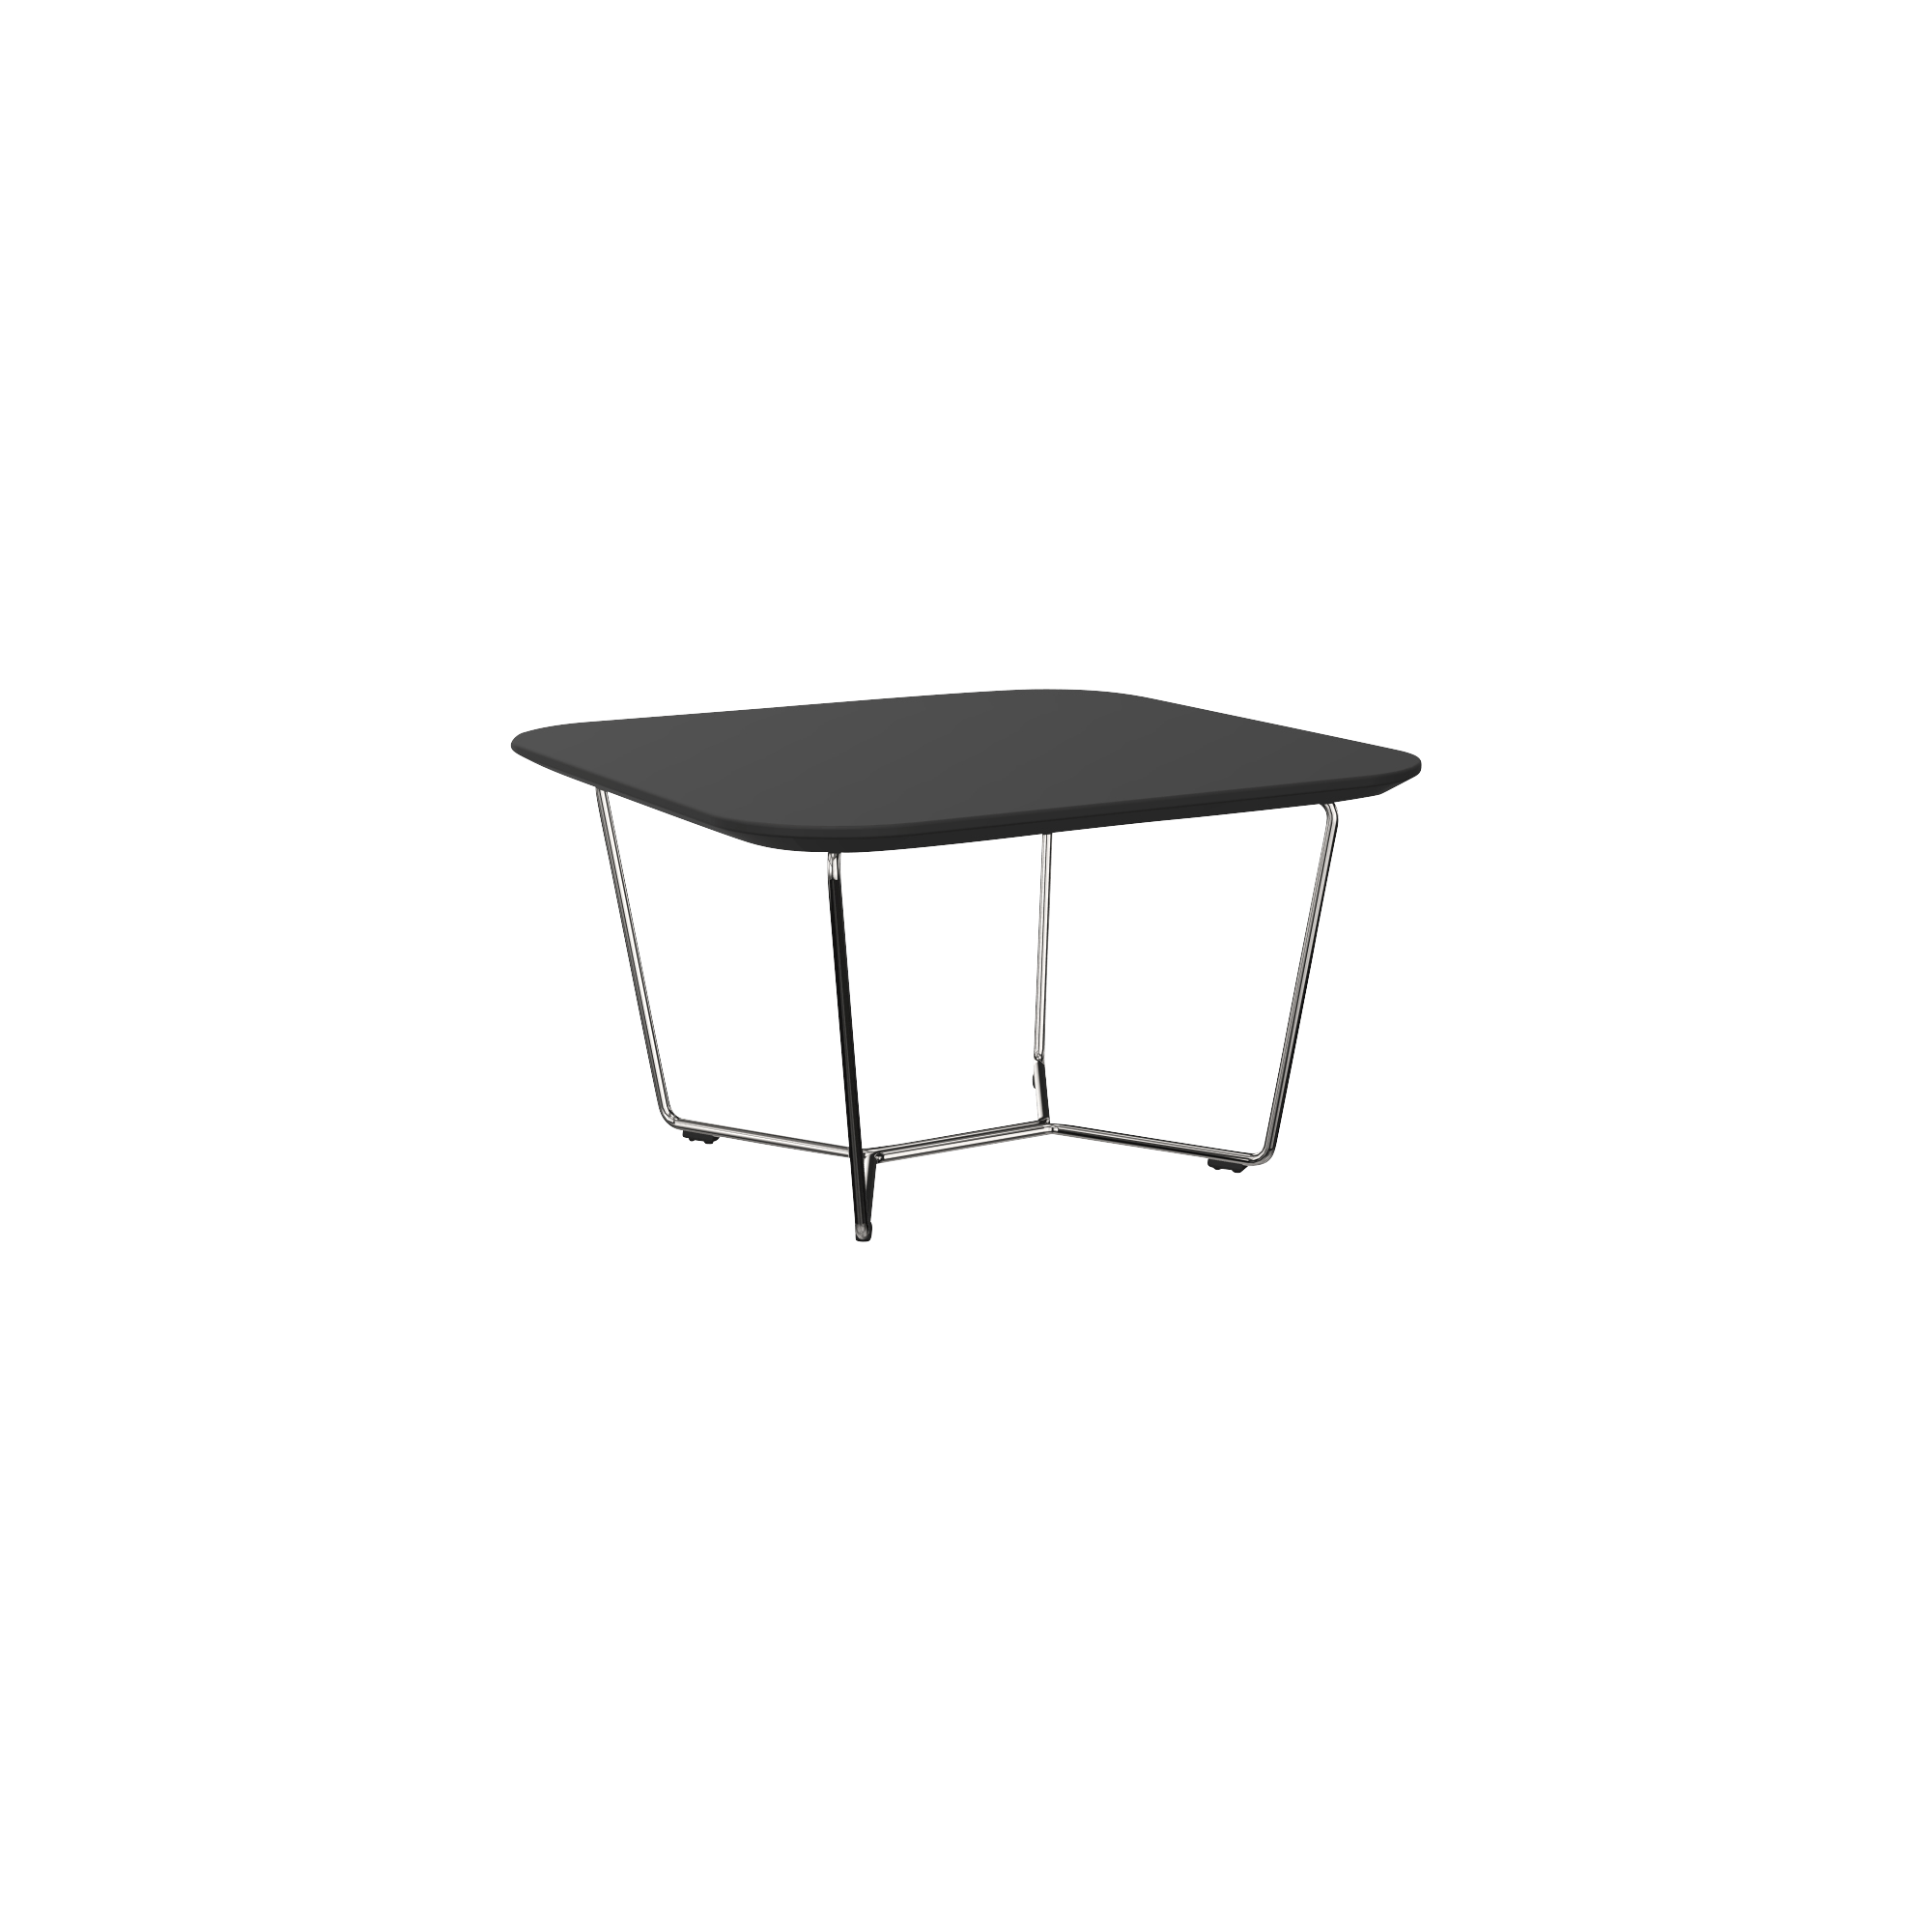 A black square table